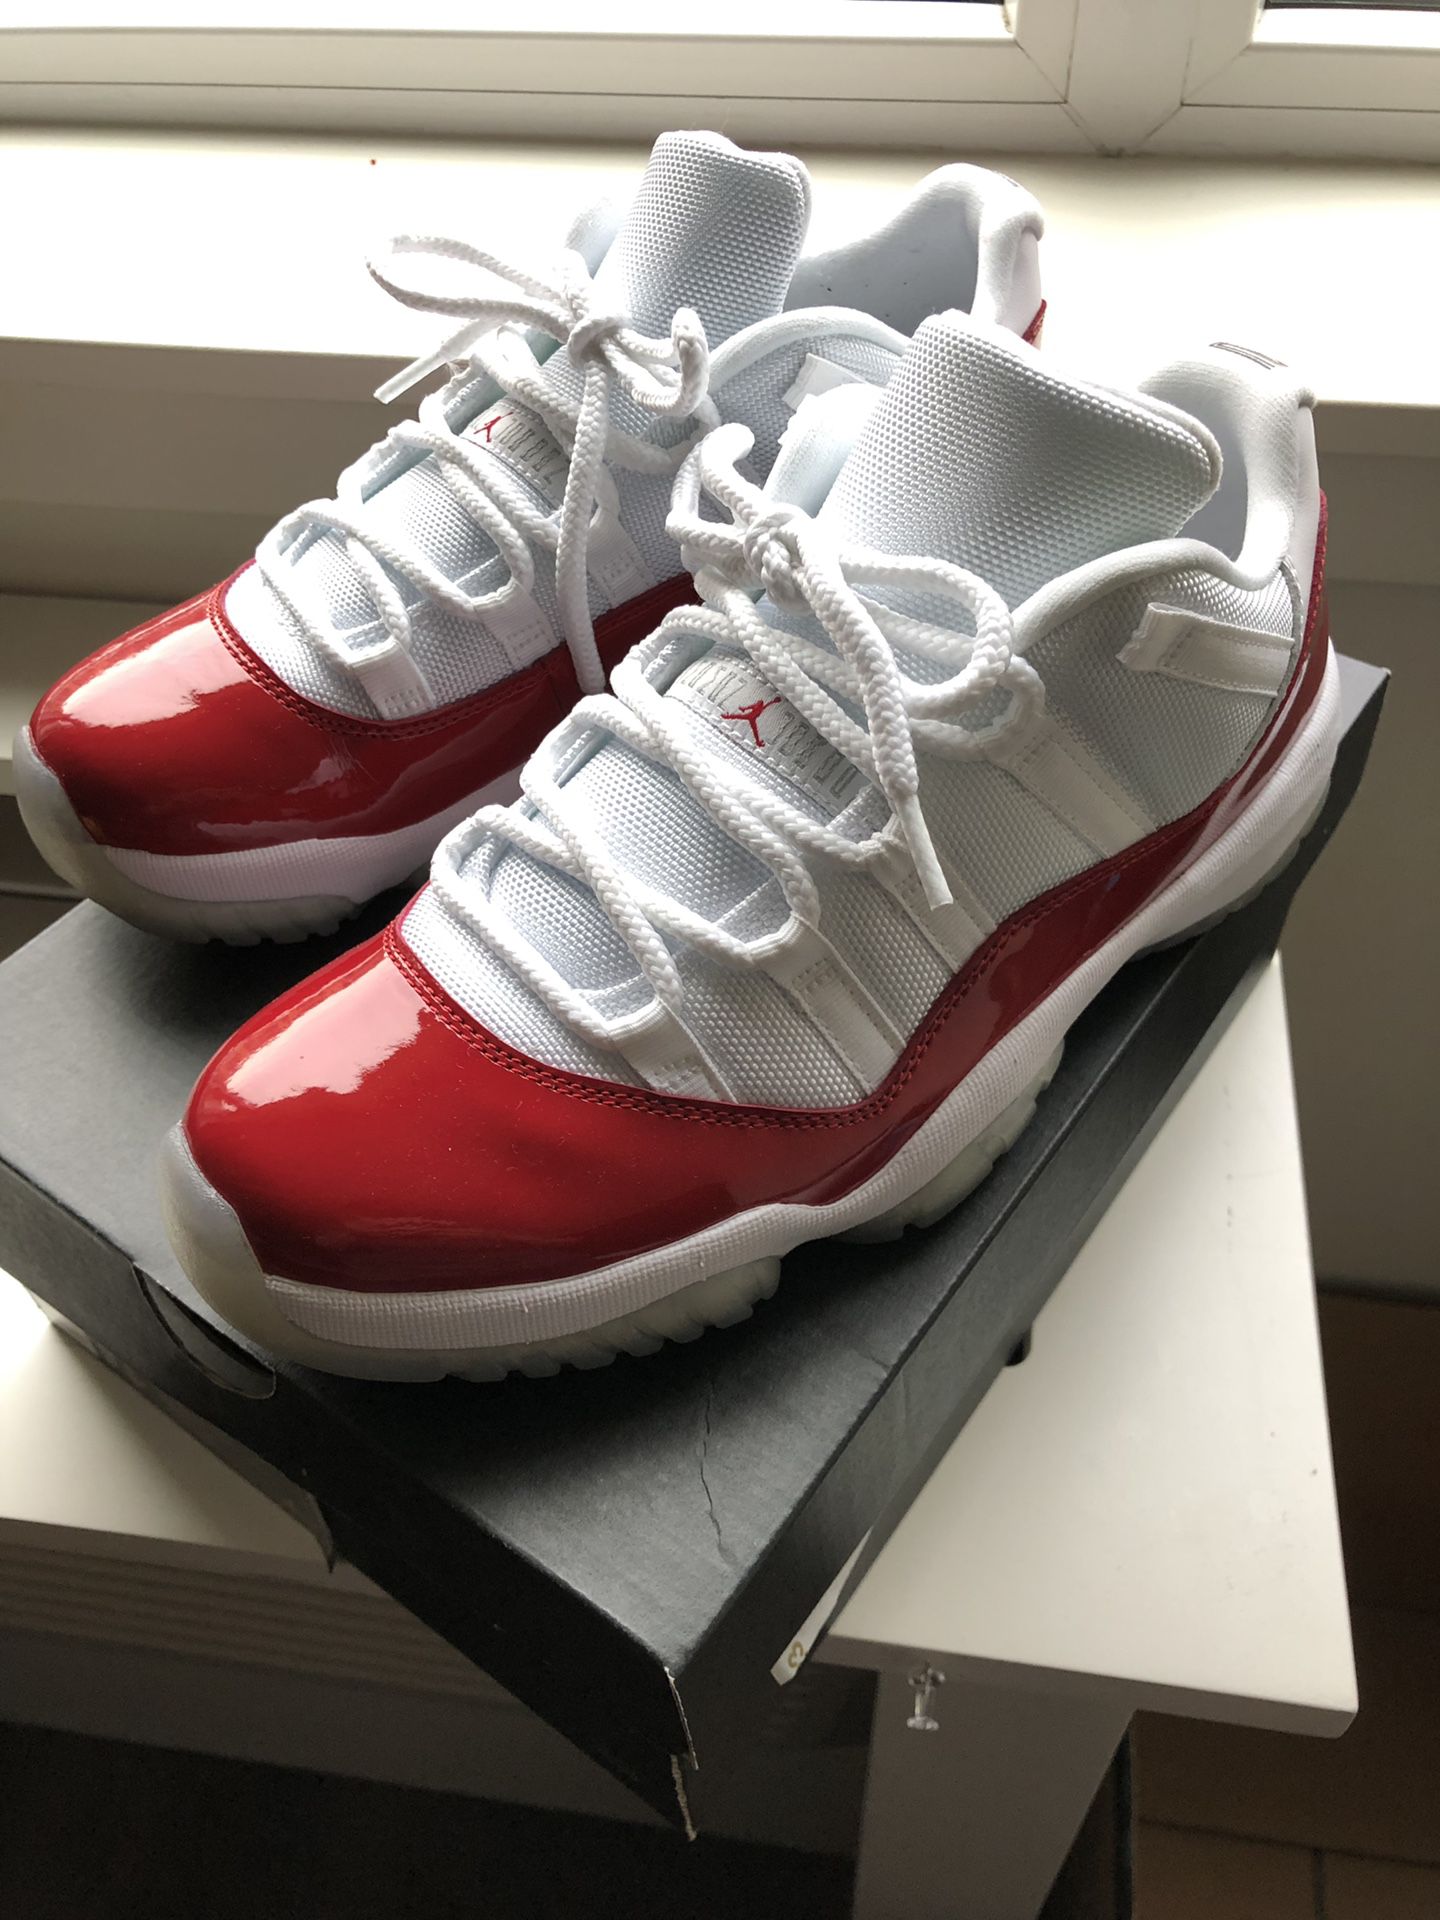 Nike Air Jordan 11 Low Retro Cherry. Size 8.5.